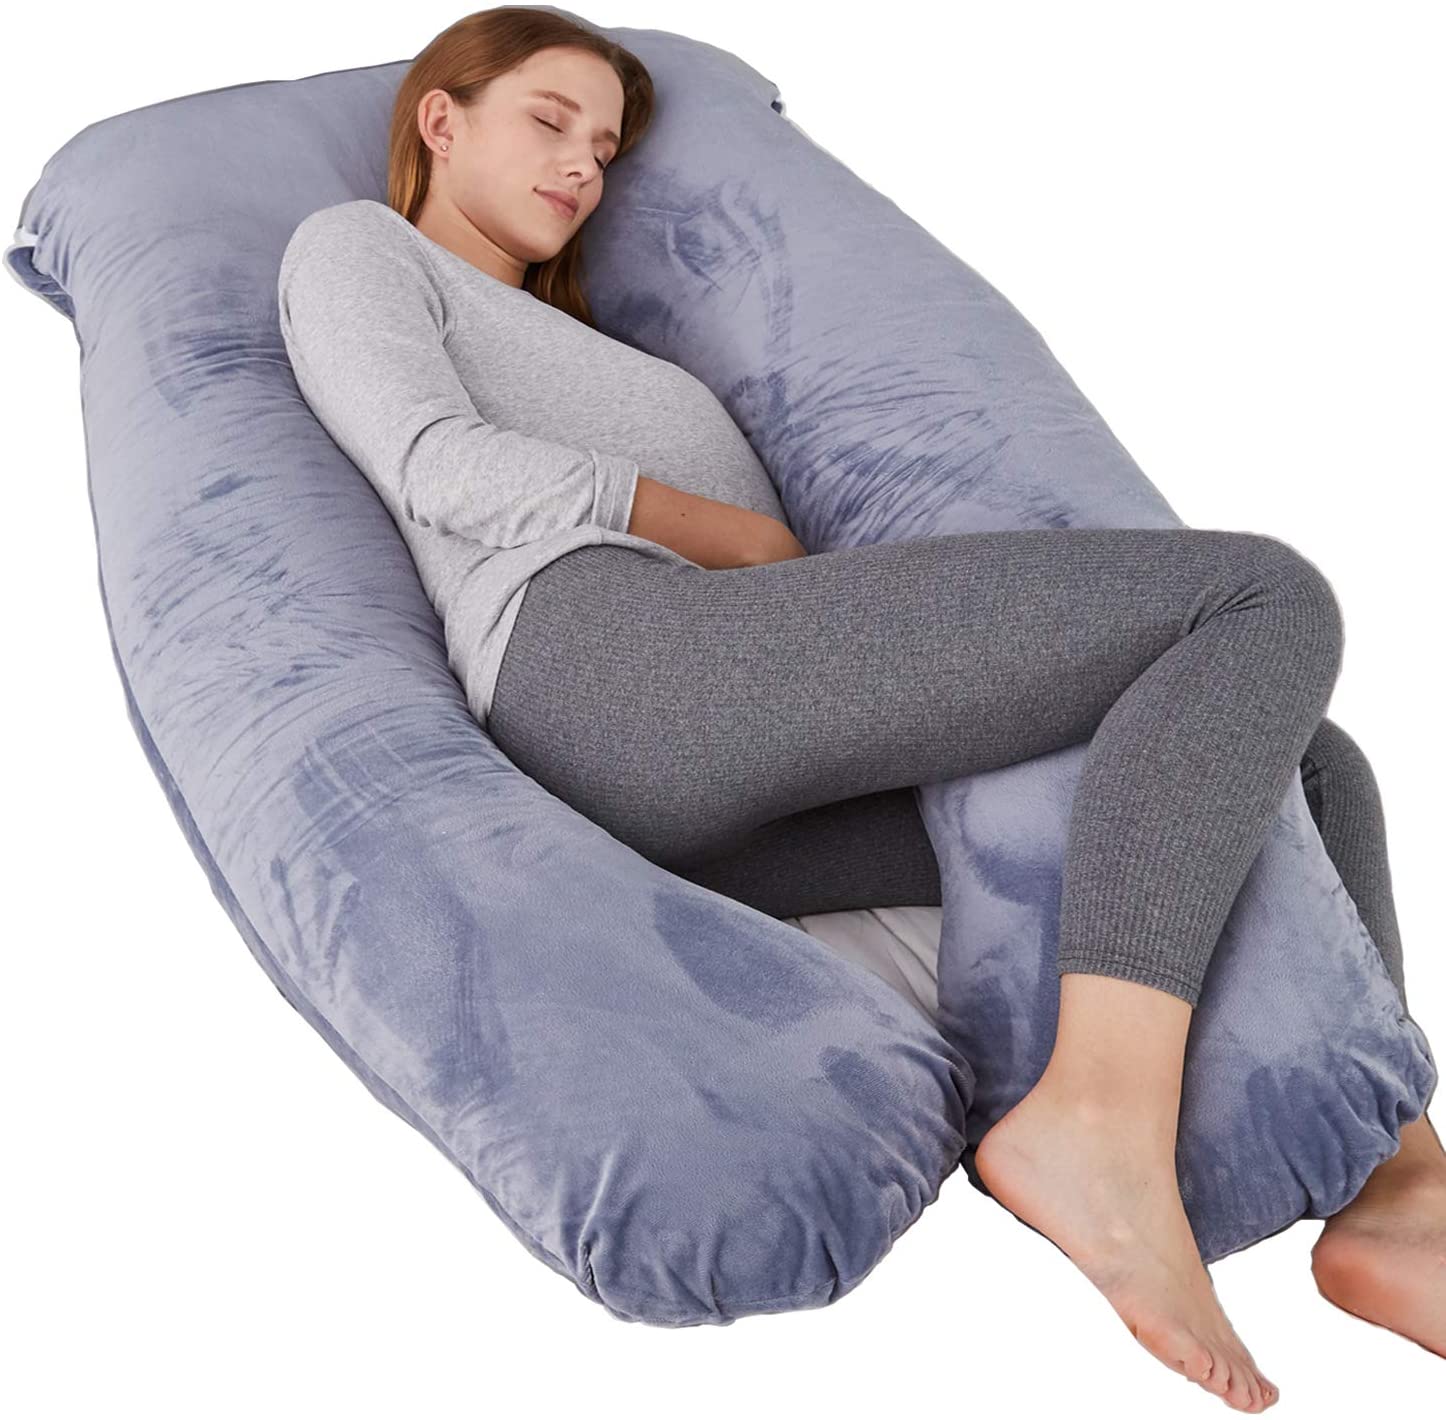 Wholesale ELNIDO QUEEN Pregnancy Body Pillows with Velvet Cover,U ...